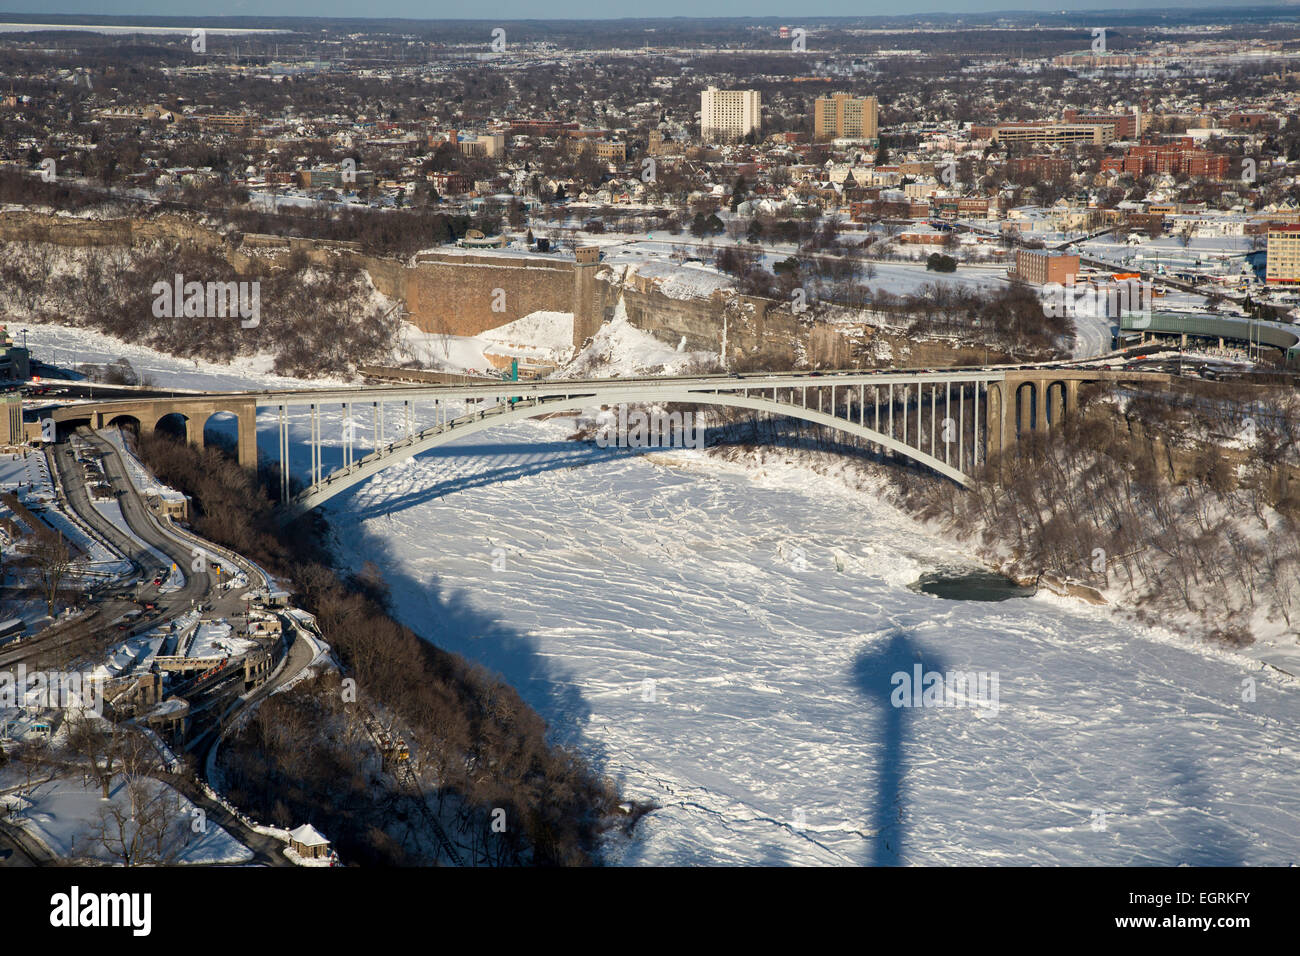 Niagara Falls, Ontario - The Rainbow Bridge internationale Grenze überqueren die gefrorenen Niagarafälle. Stockfoto